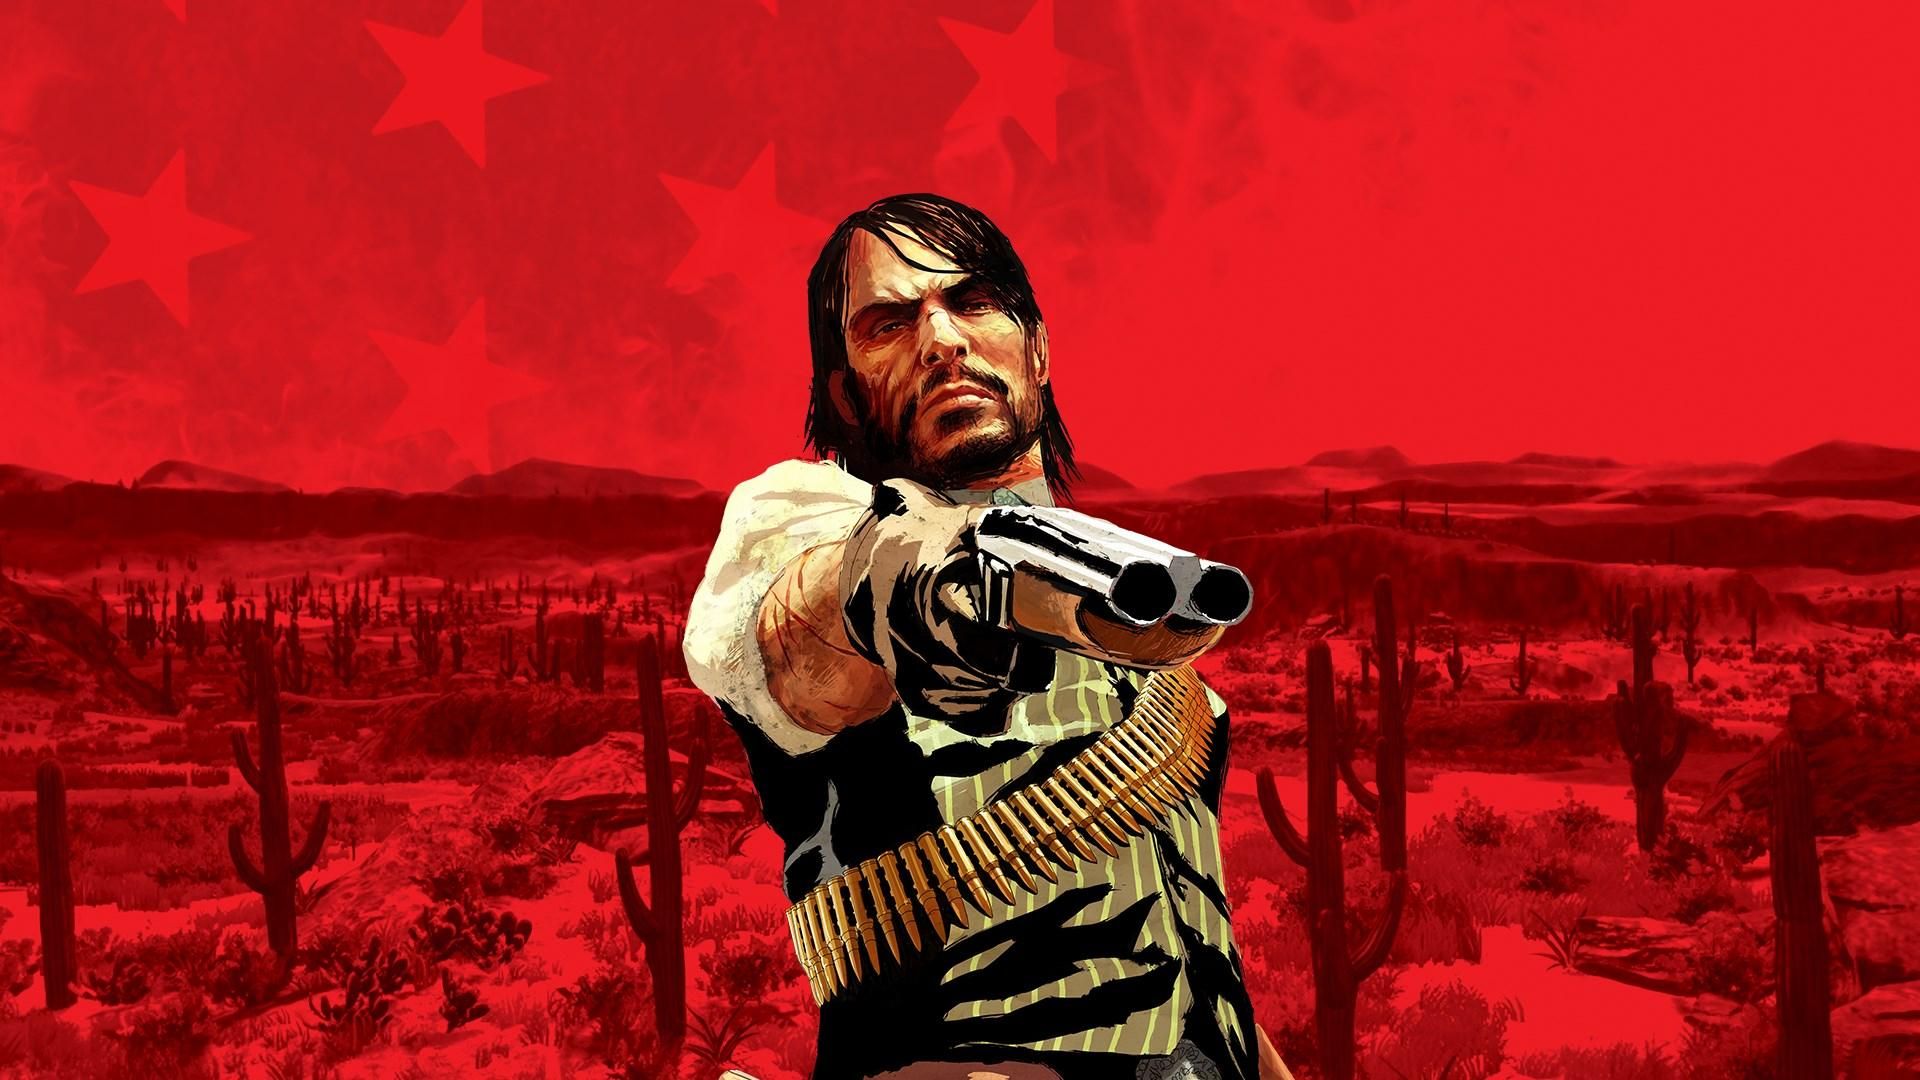 Фанаты готовят переиздание игры Red Dead Redemption на PC